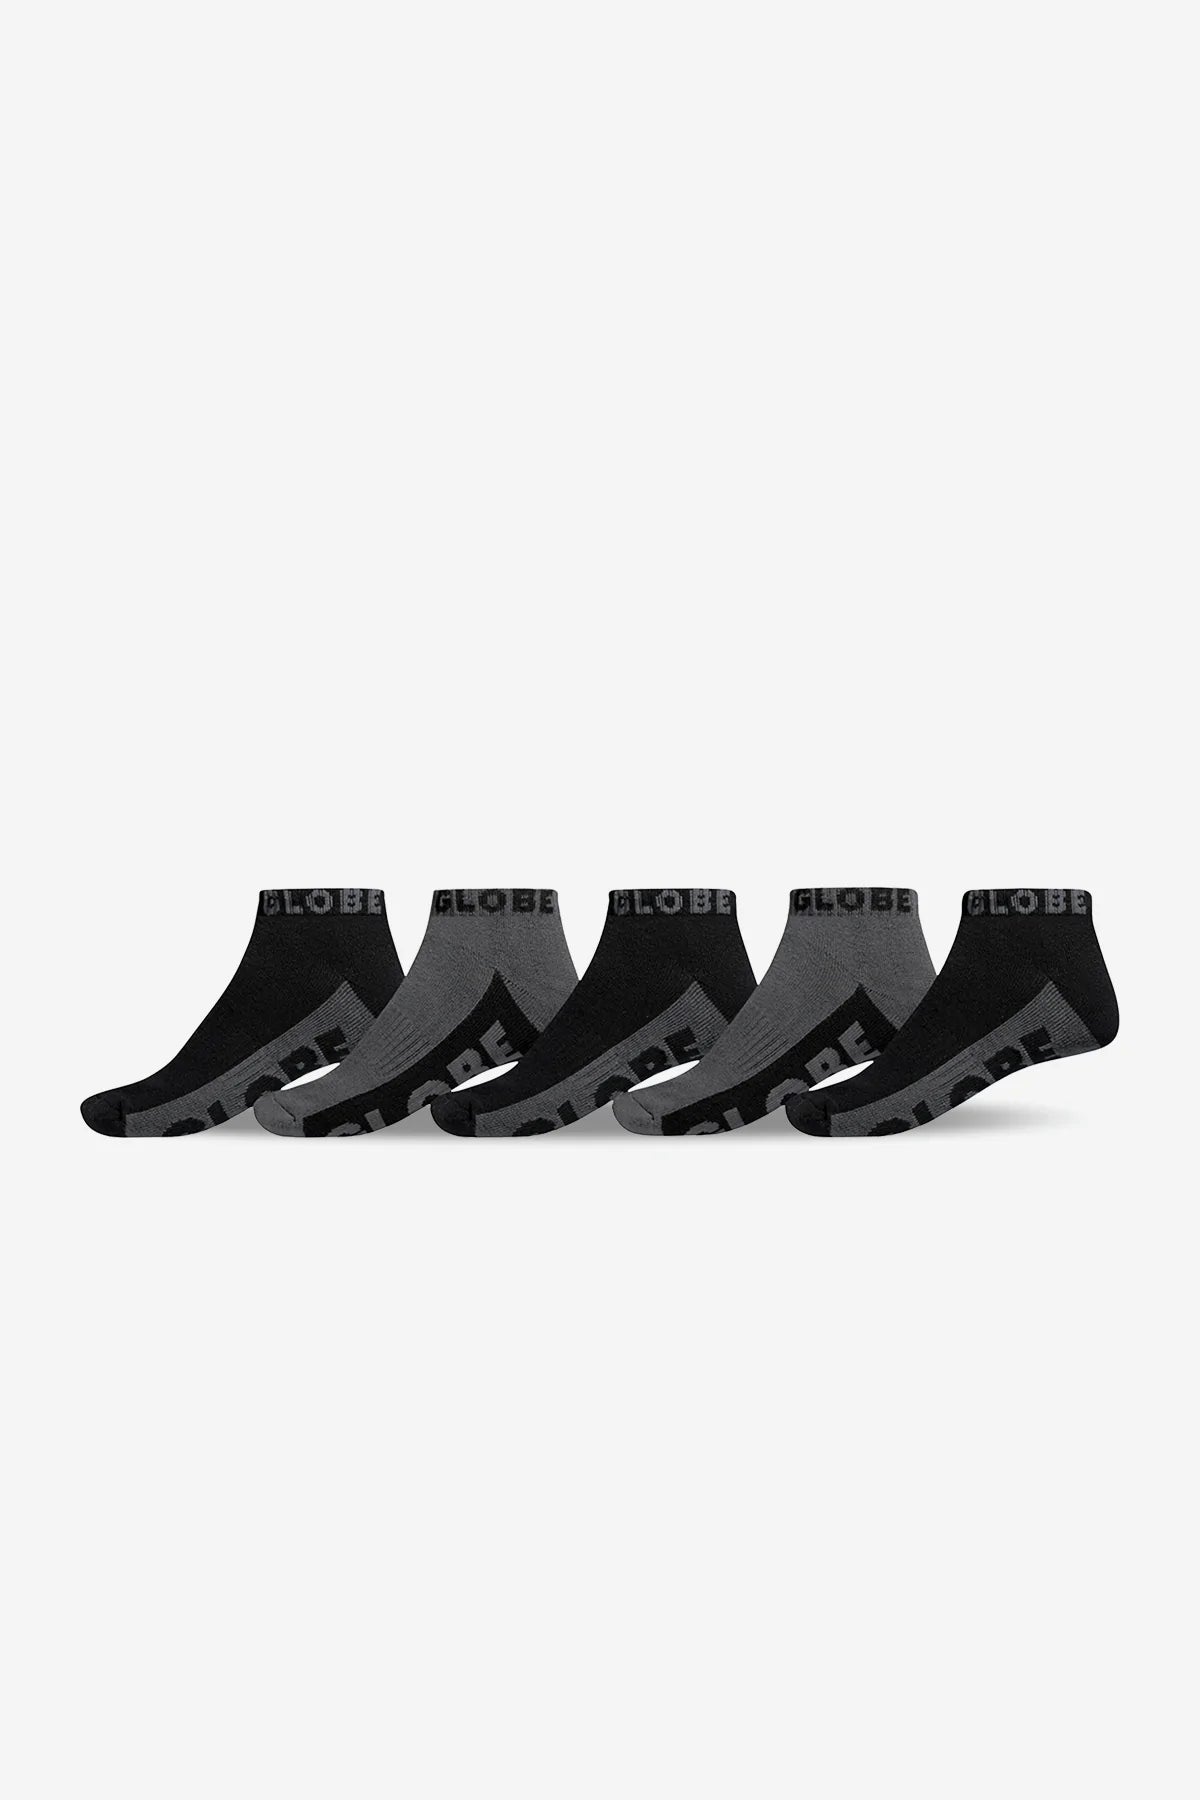 Globe Black/Grey Ankle Sock 5 Pack